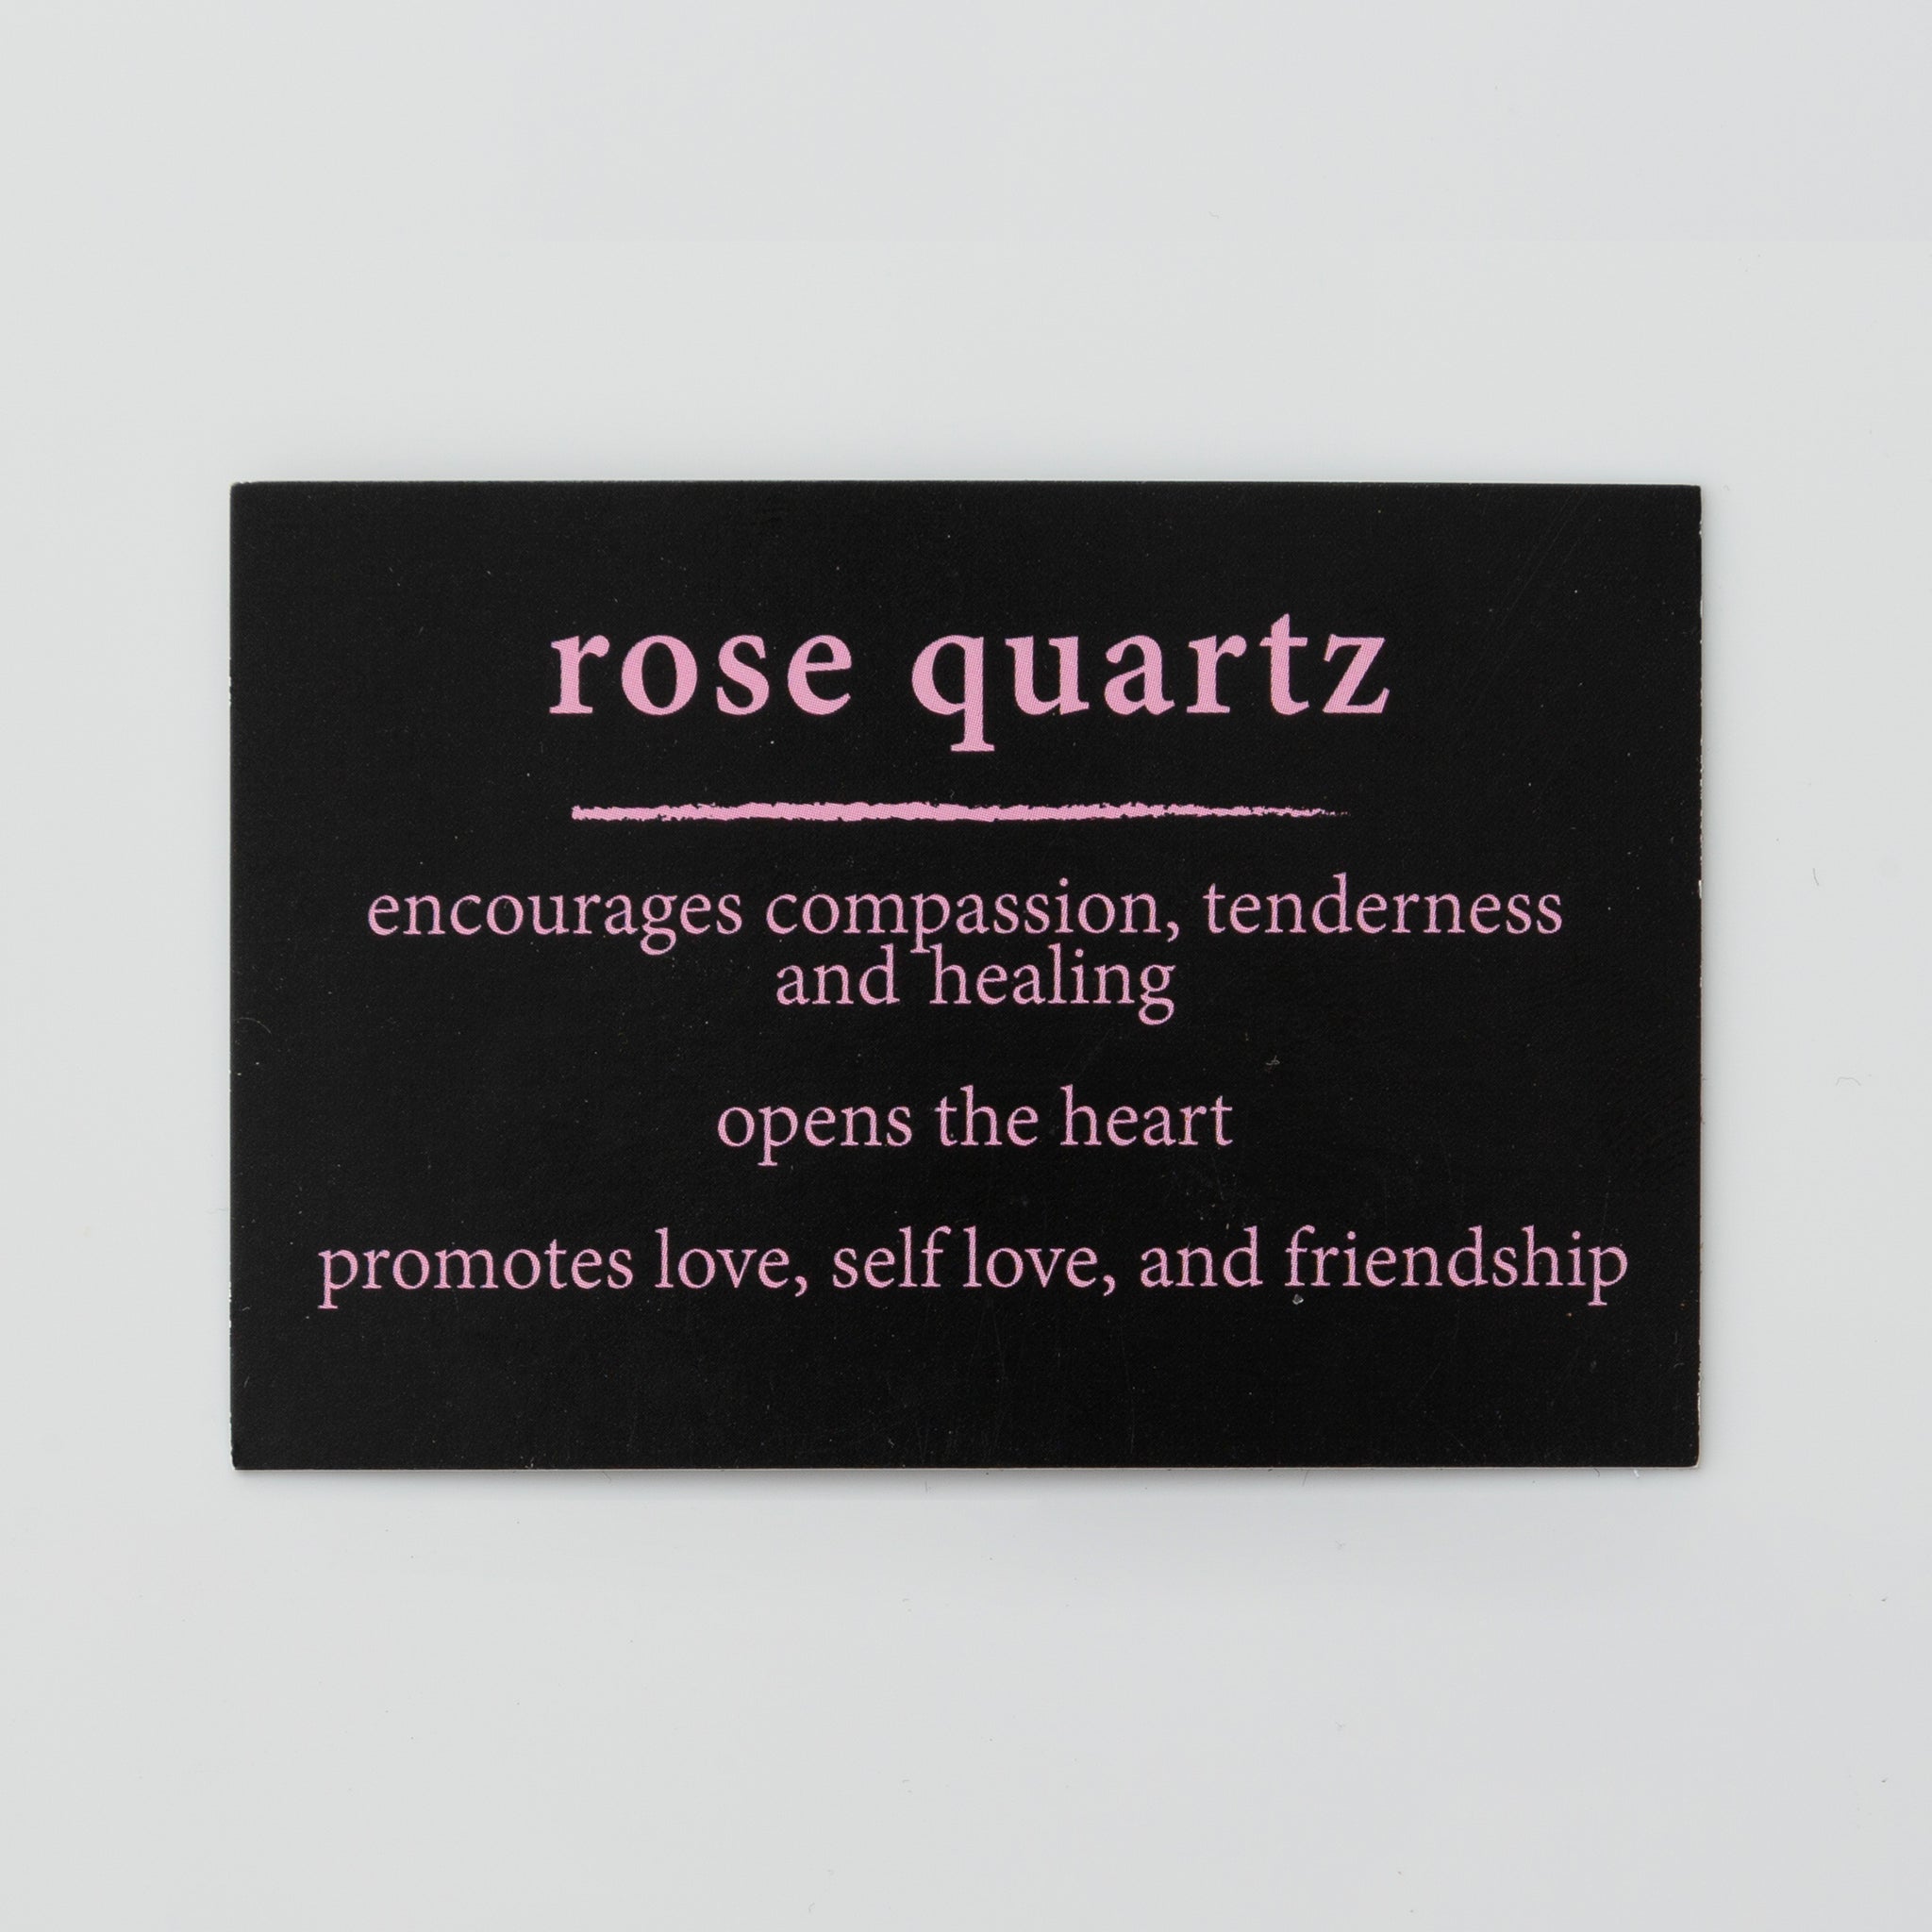 rose quartz facial mist